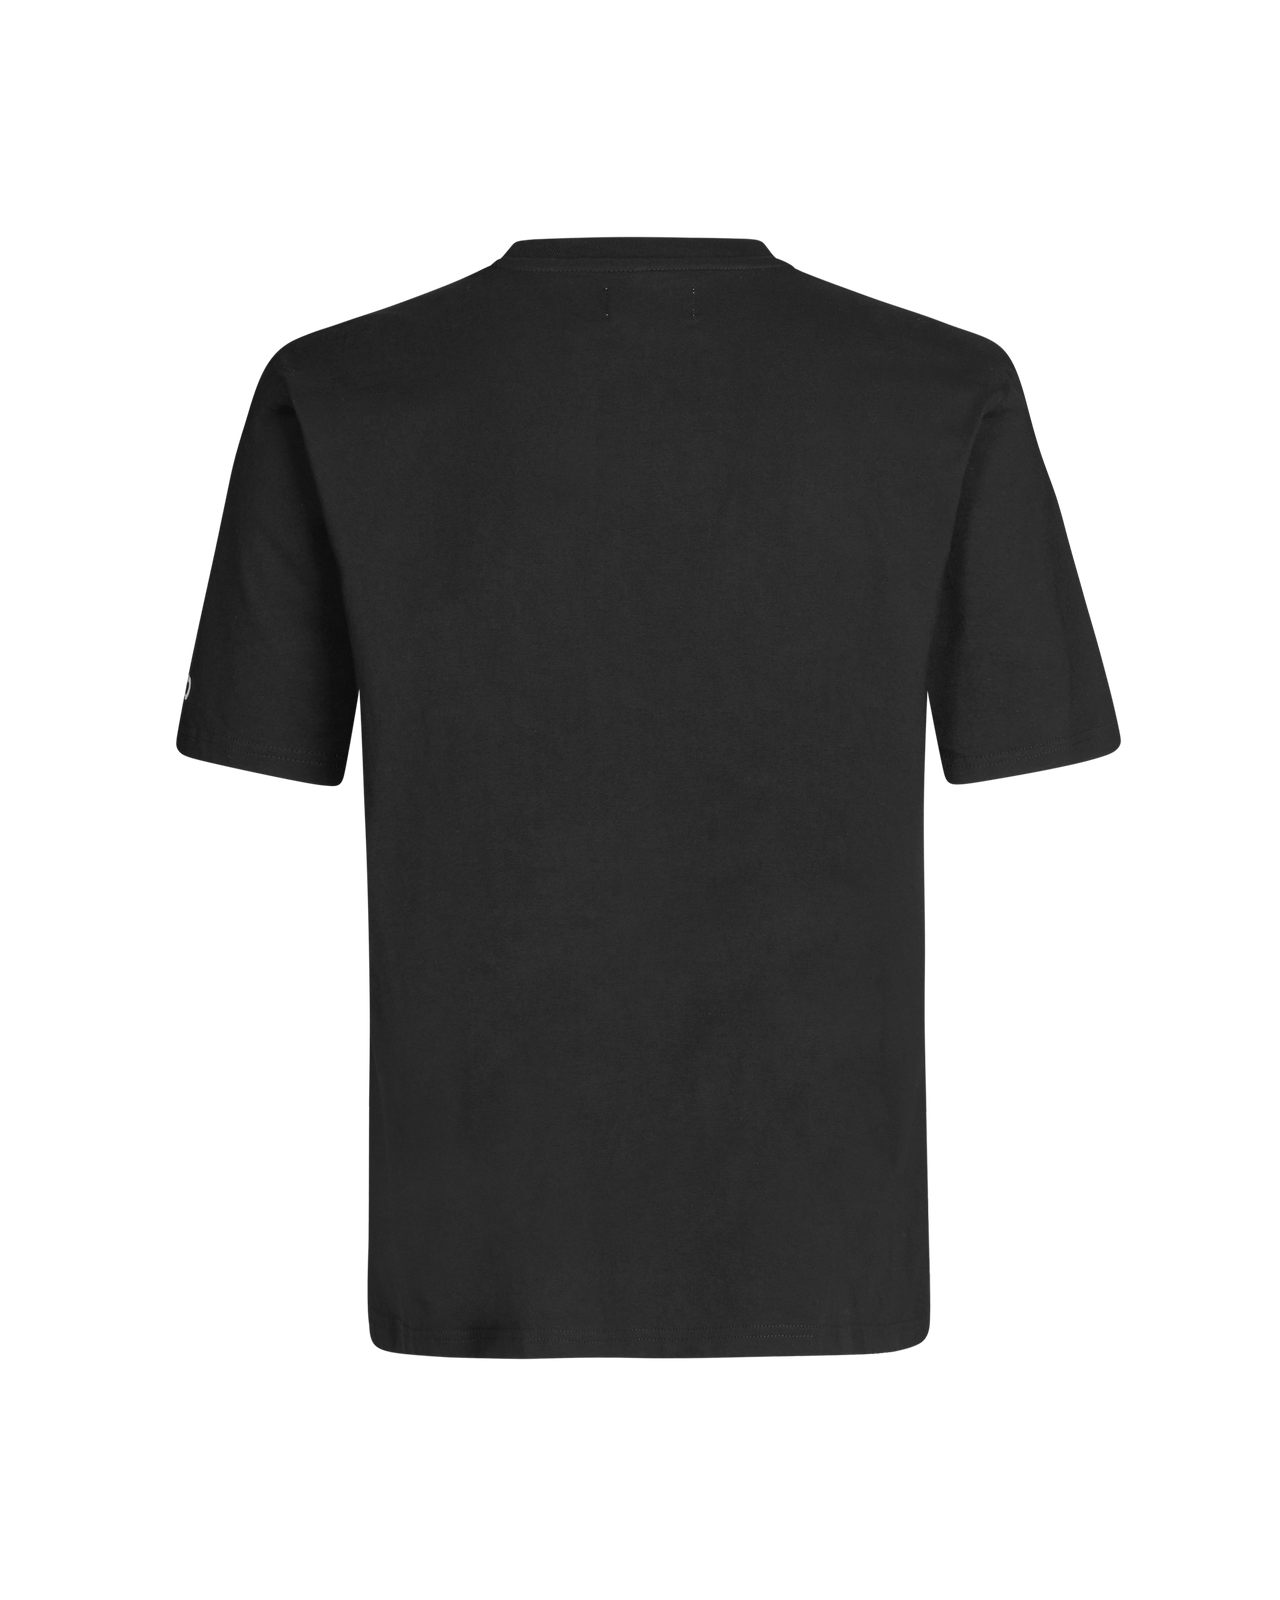 Off-Race T.K.O Transmission T-Shirt - Black